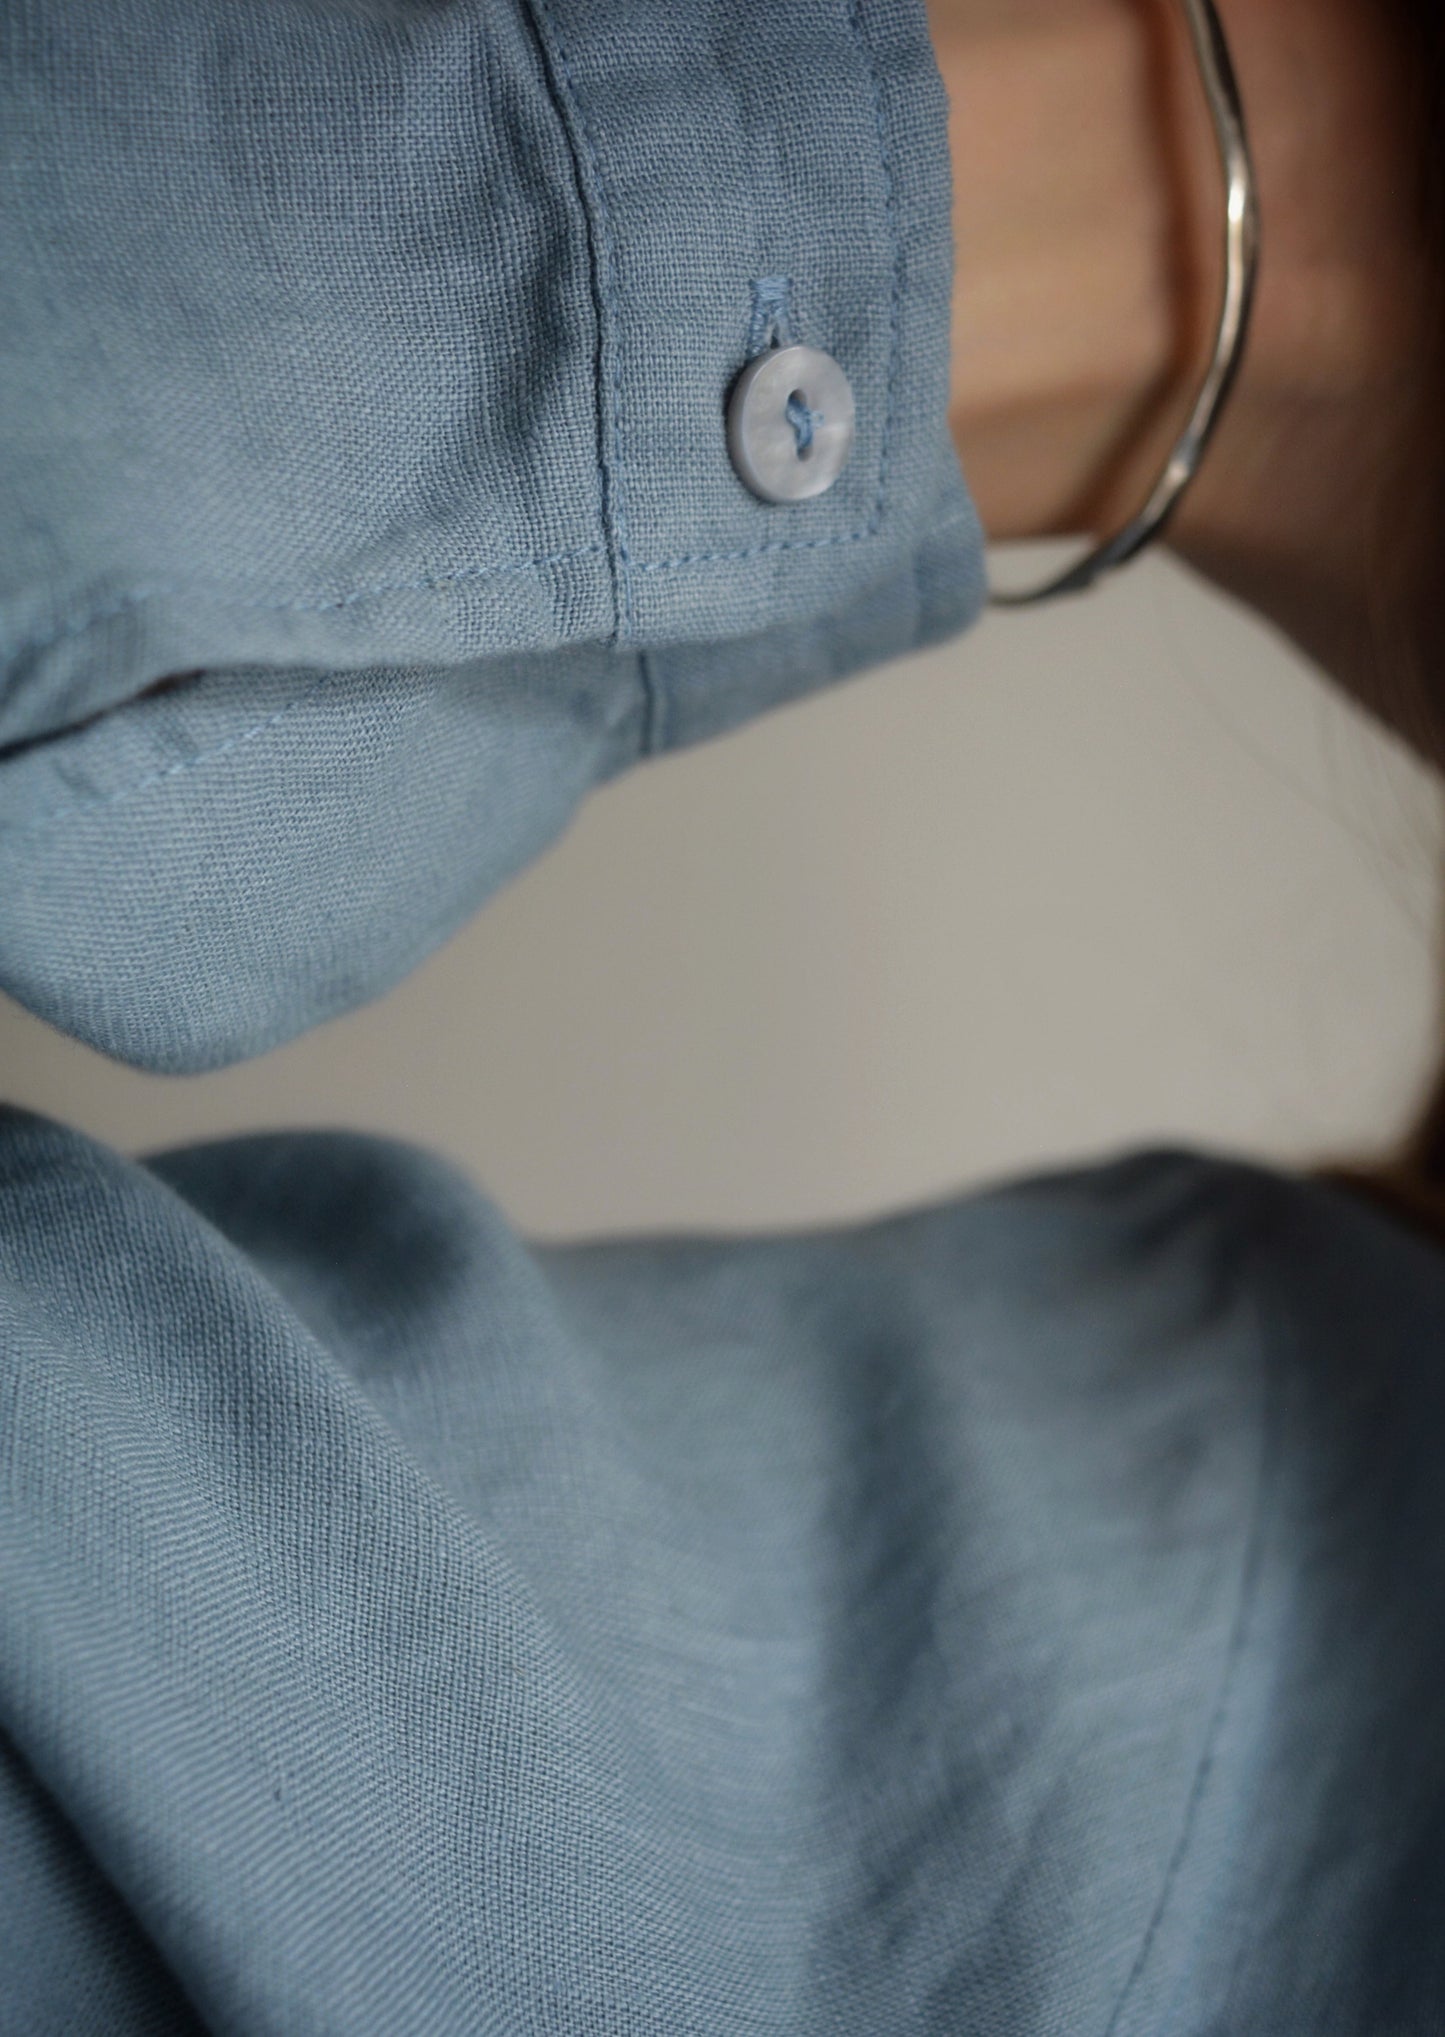 European Linen Long Sleeve Shirt in Stone Blue color